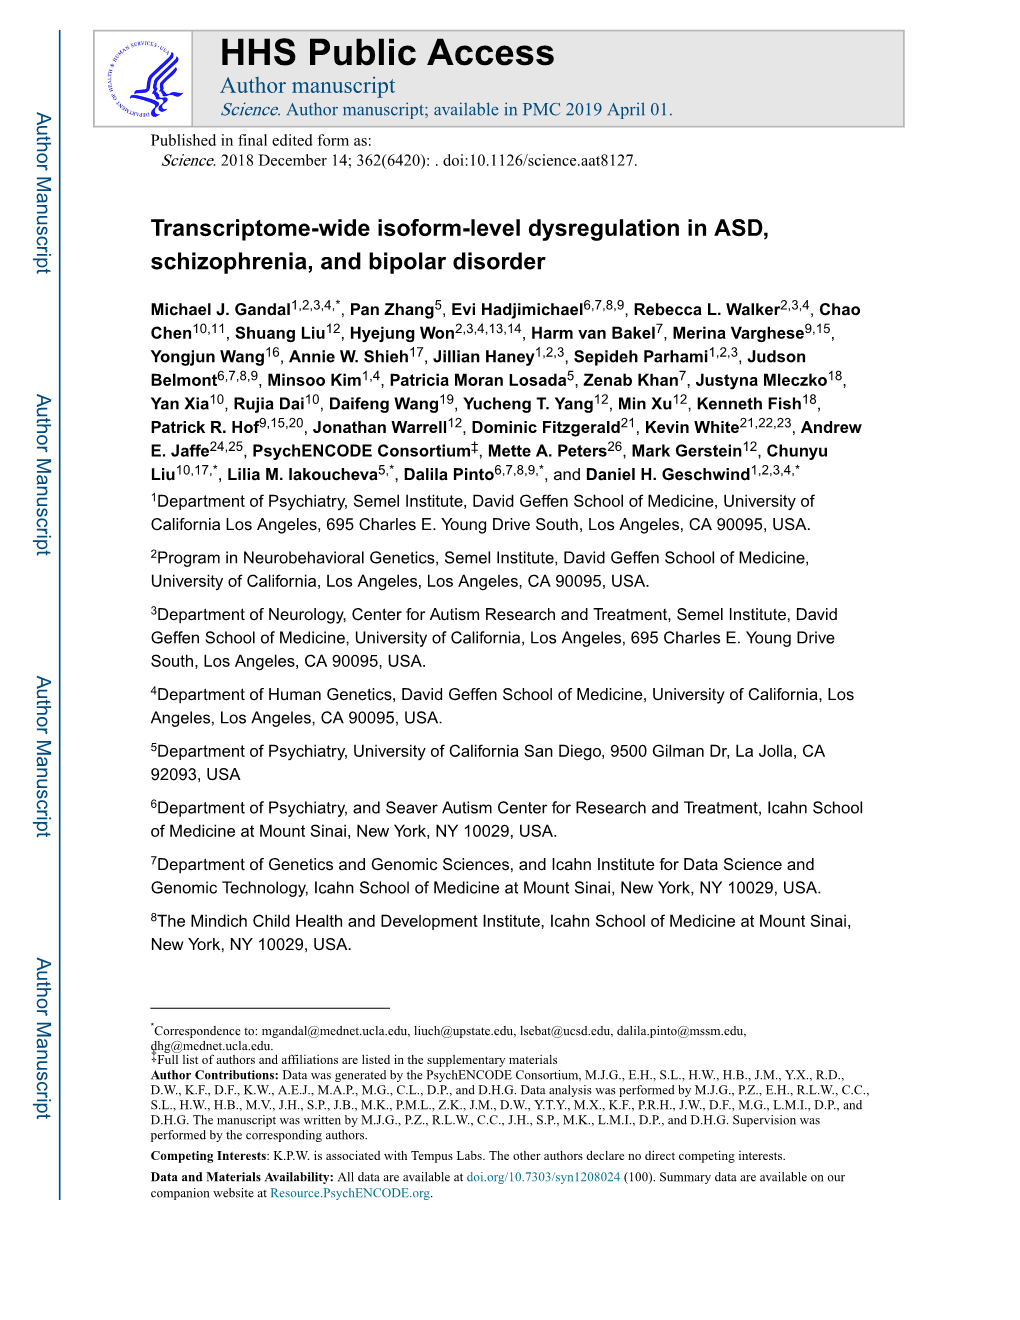 Transcriptome-Wide Isoform-Level Dysregulation in ASD, Schizophrenia, and Bipolar Disorder